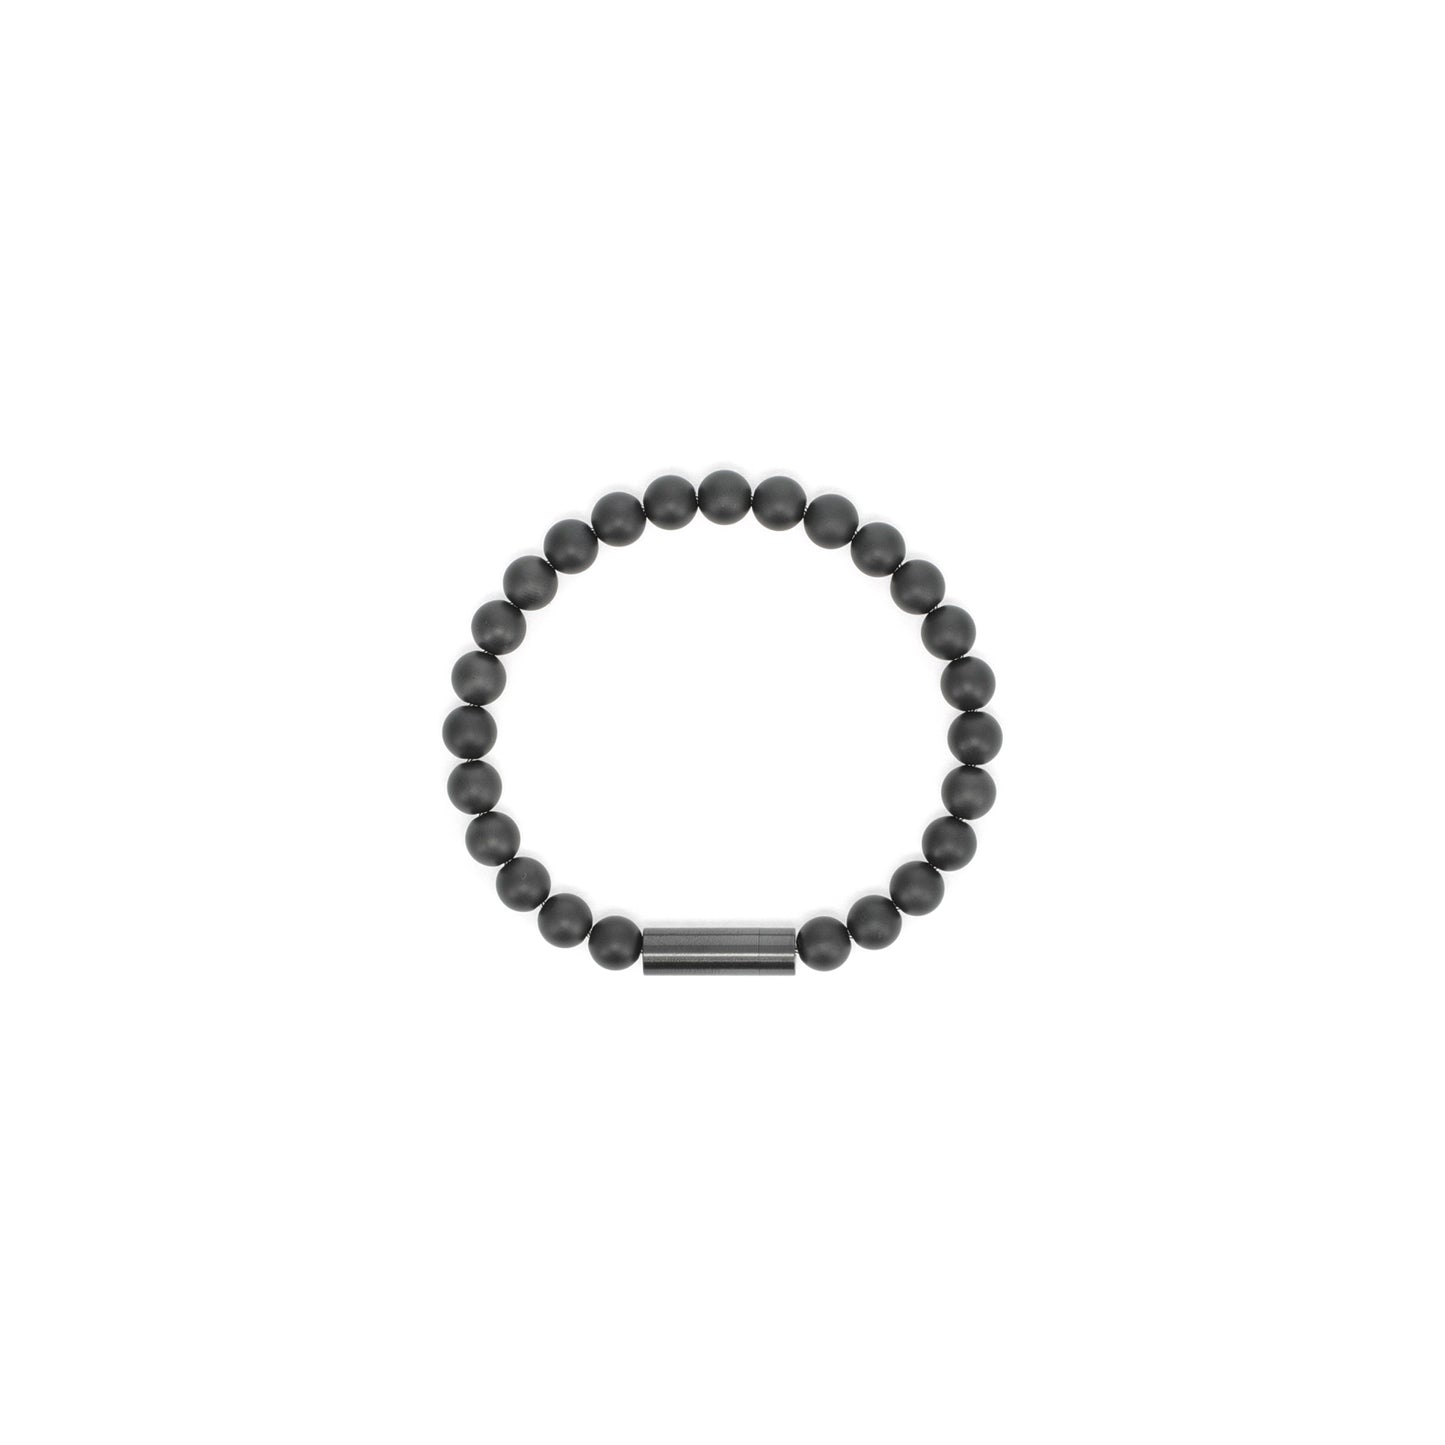 Le Gramme 28g black beads bracelet (Black Ceramic)